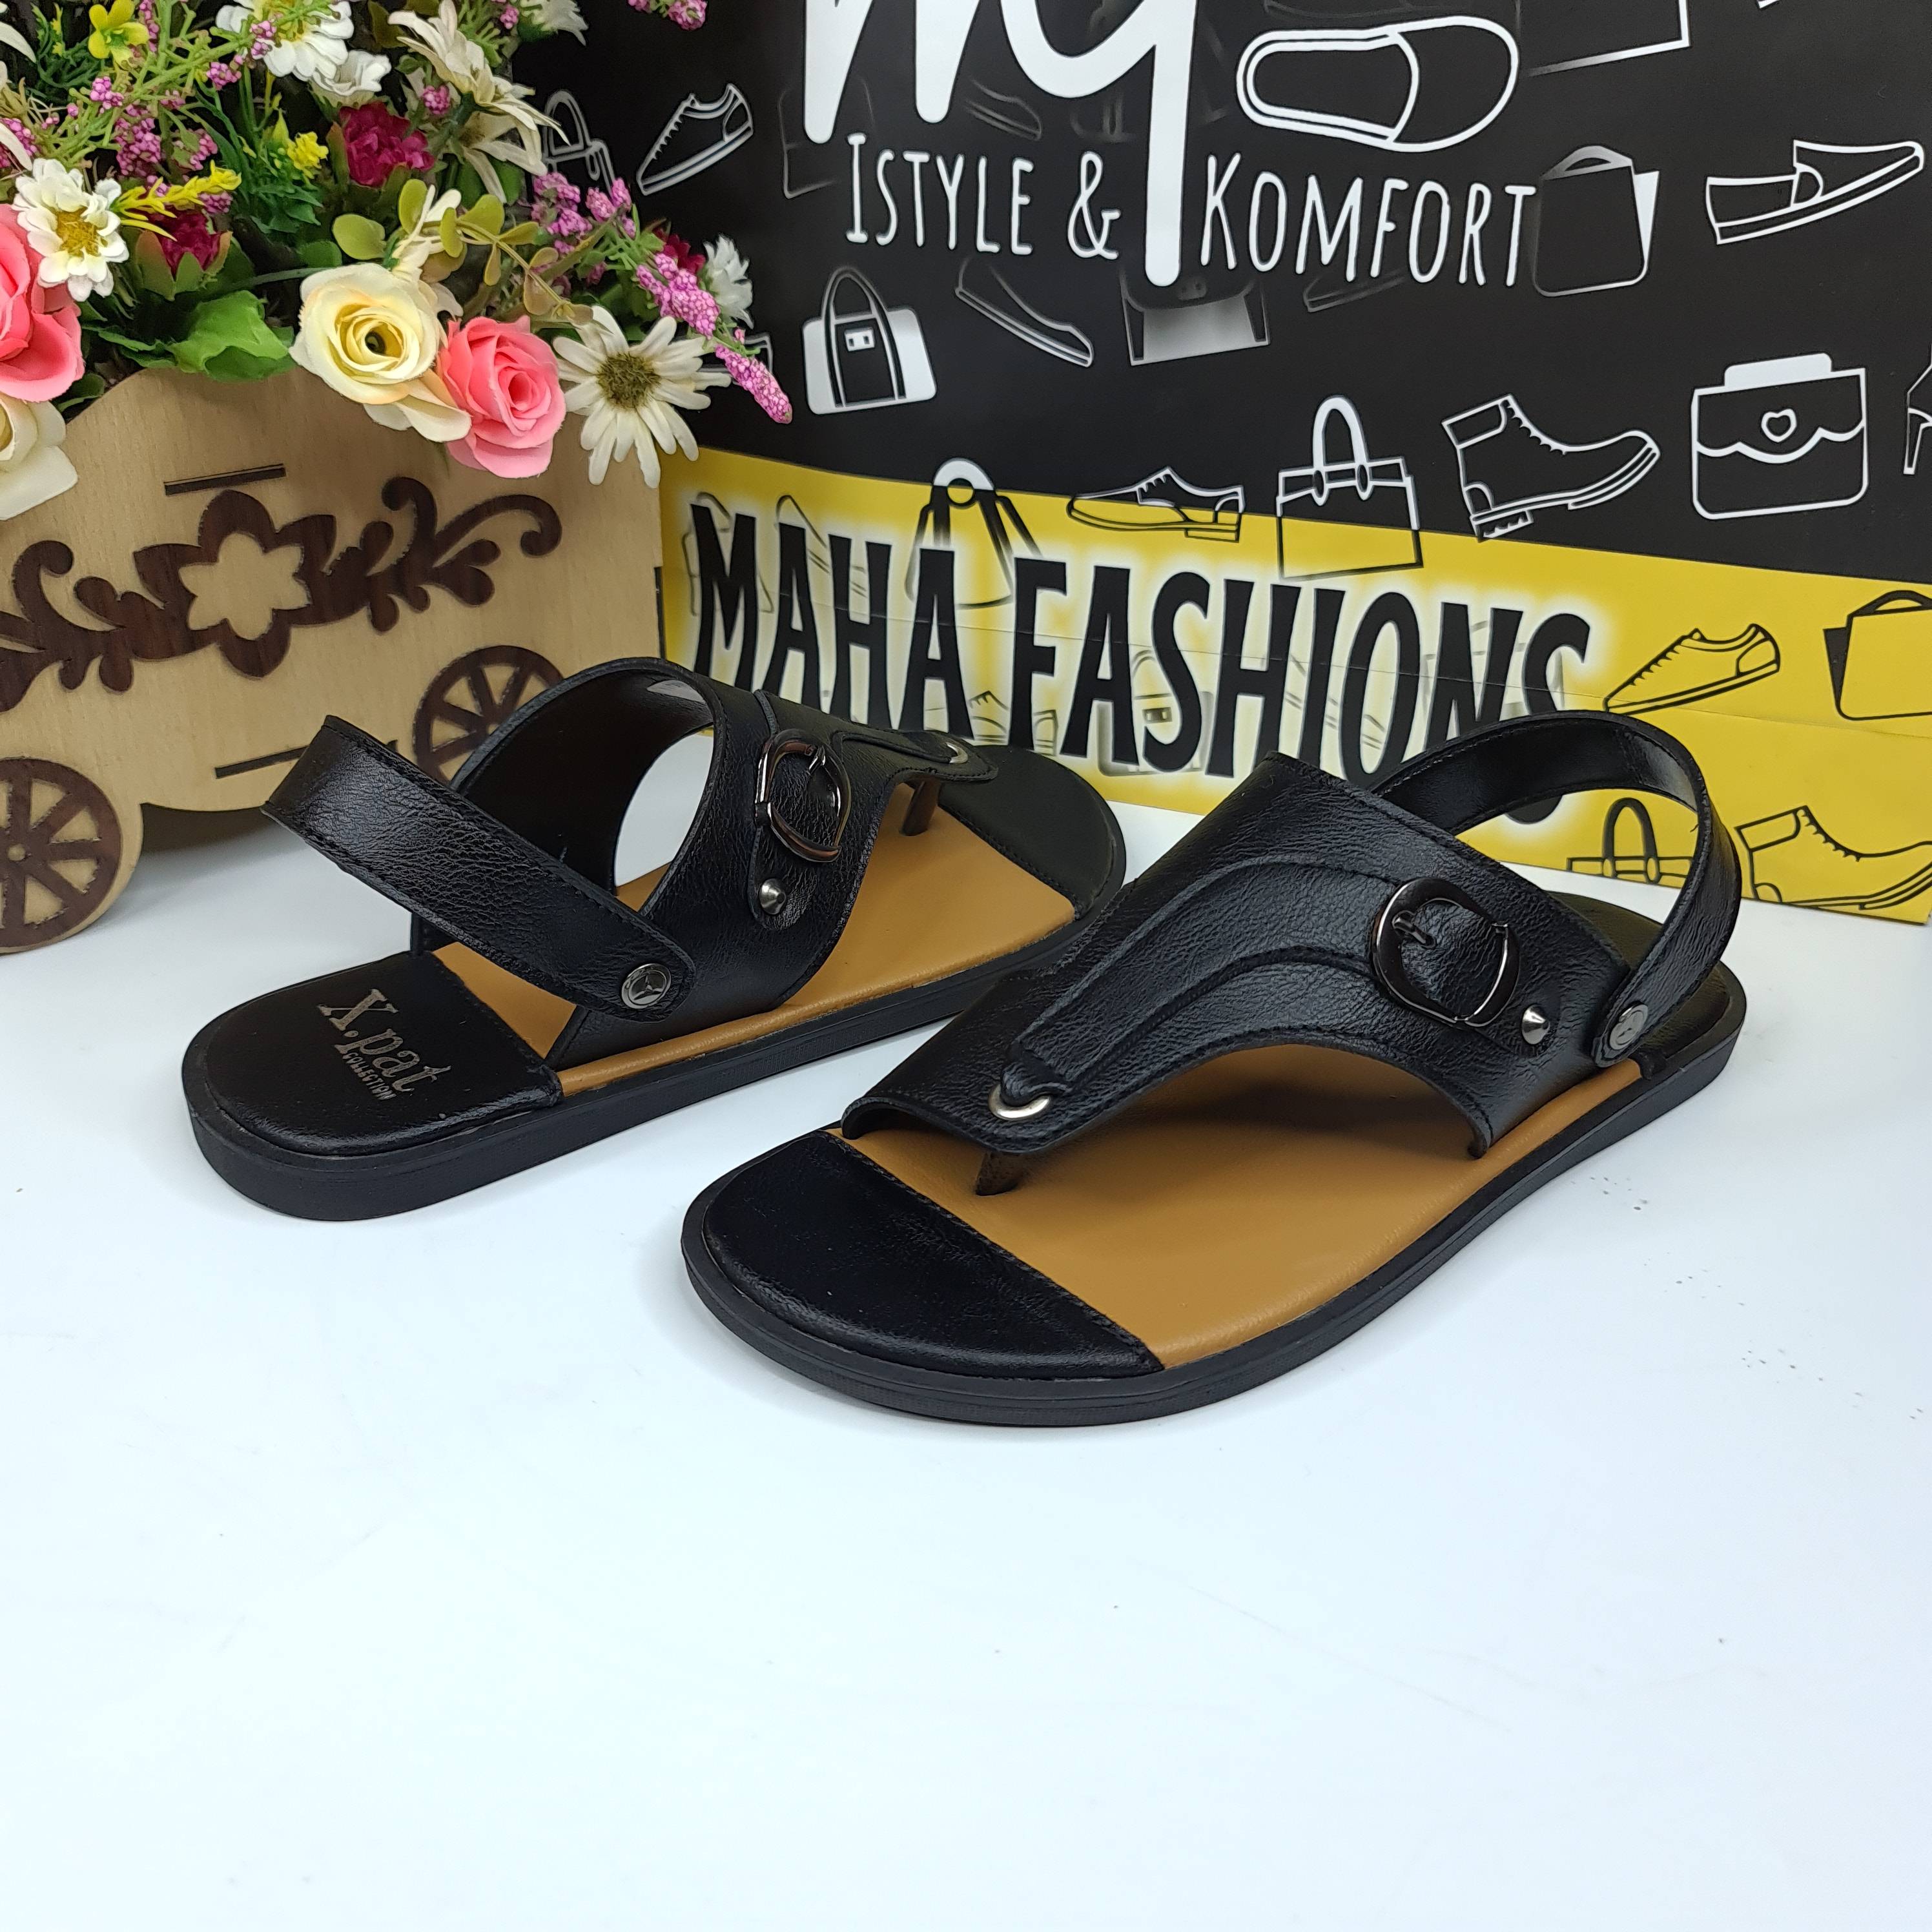 Black Stitch Pattern Sandals - Maha fashions -  